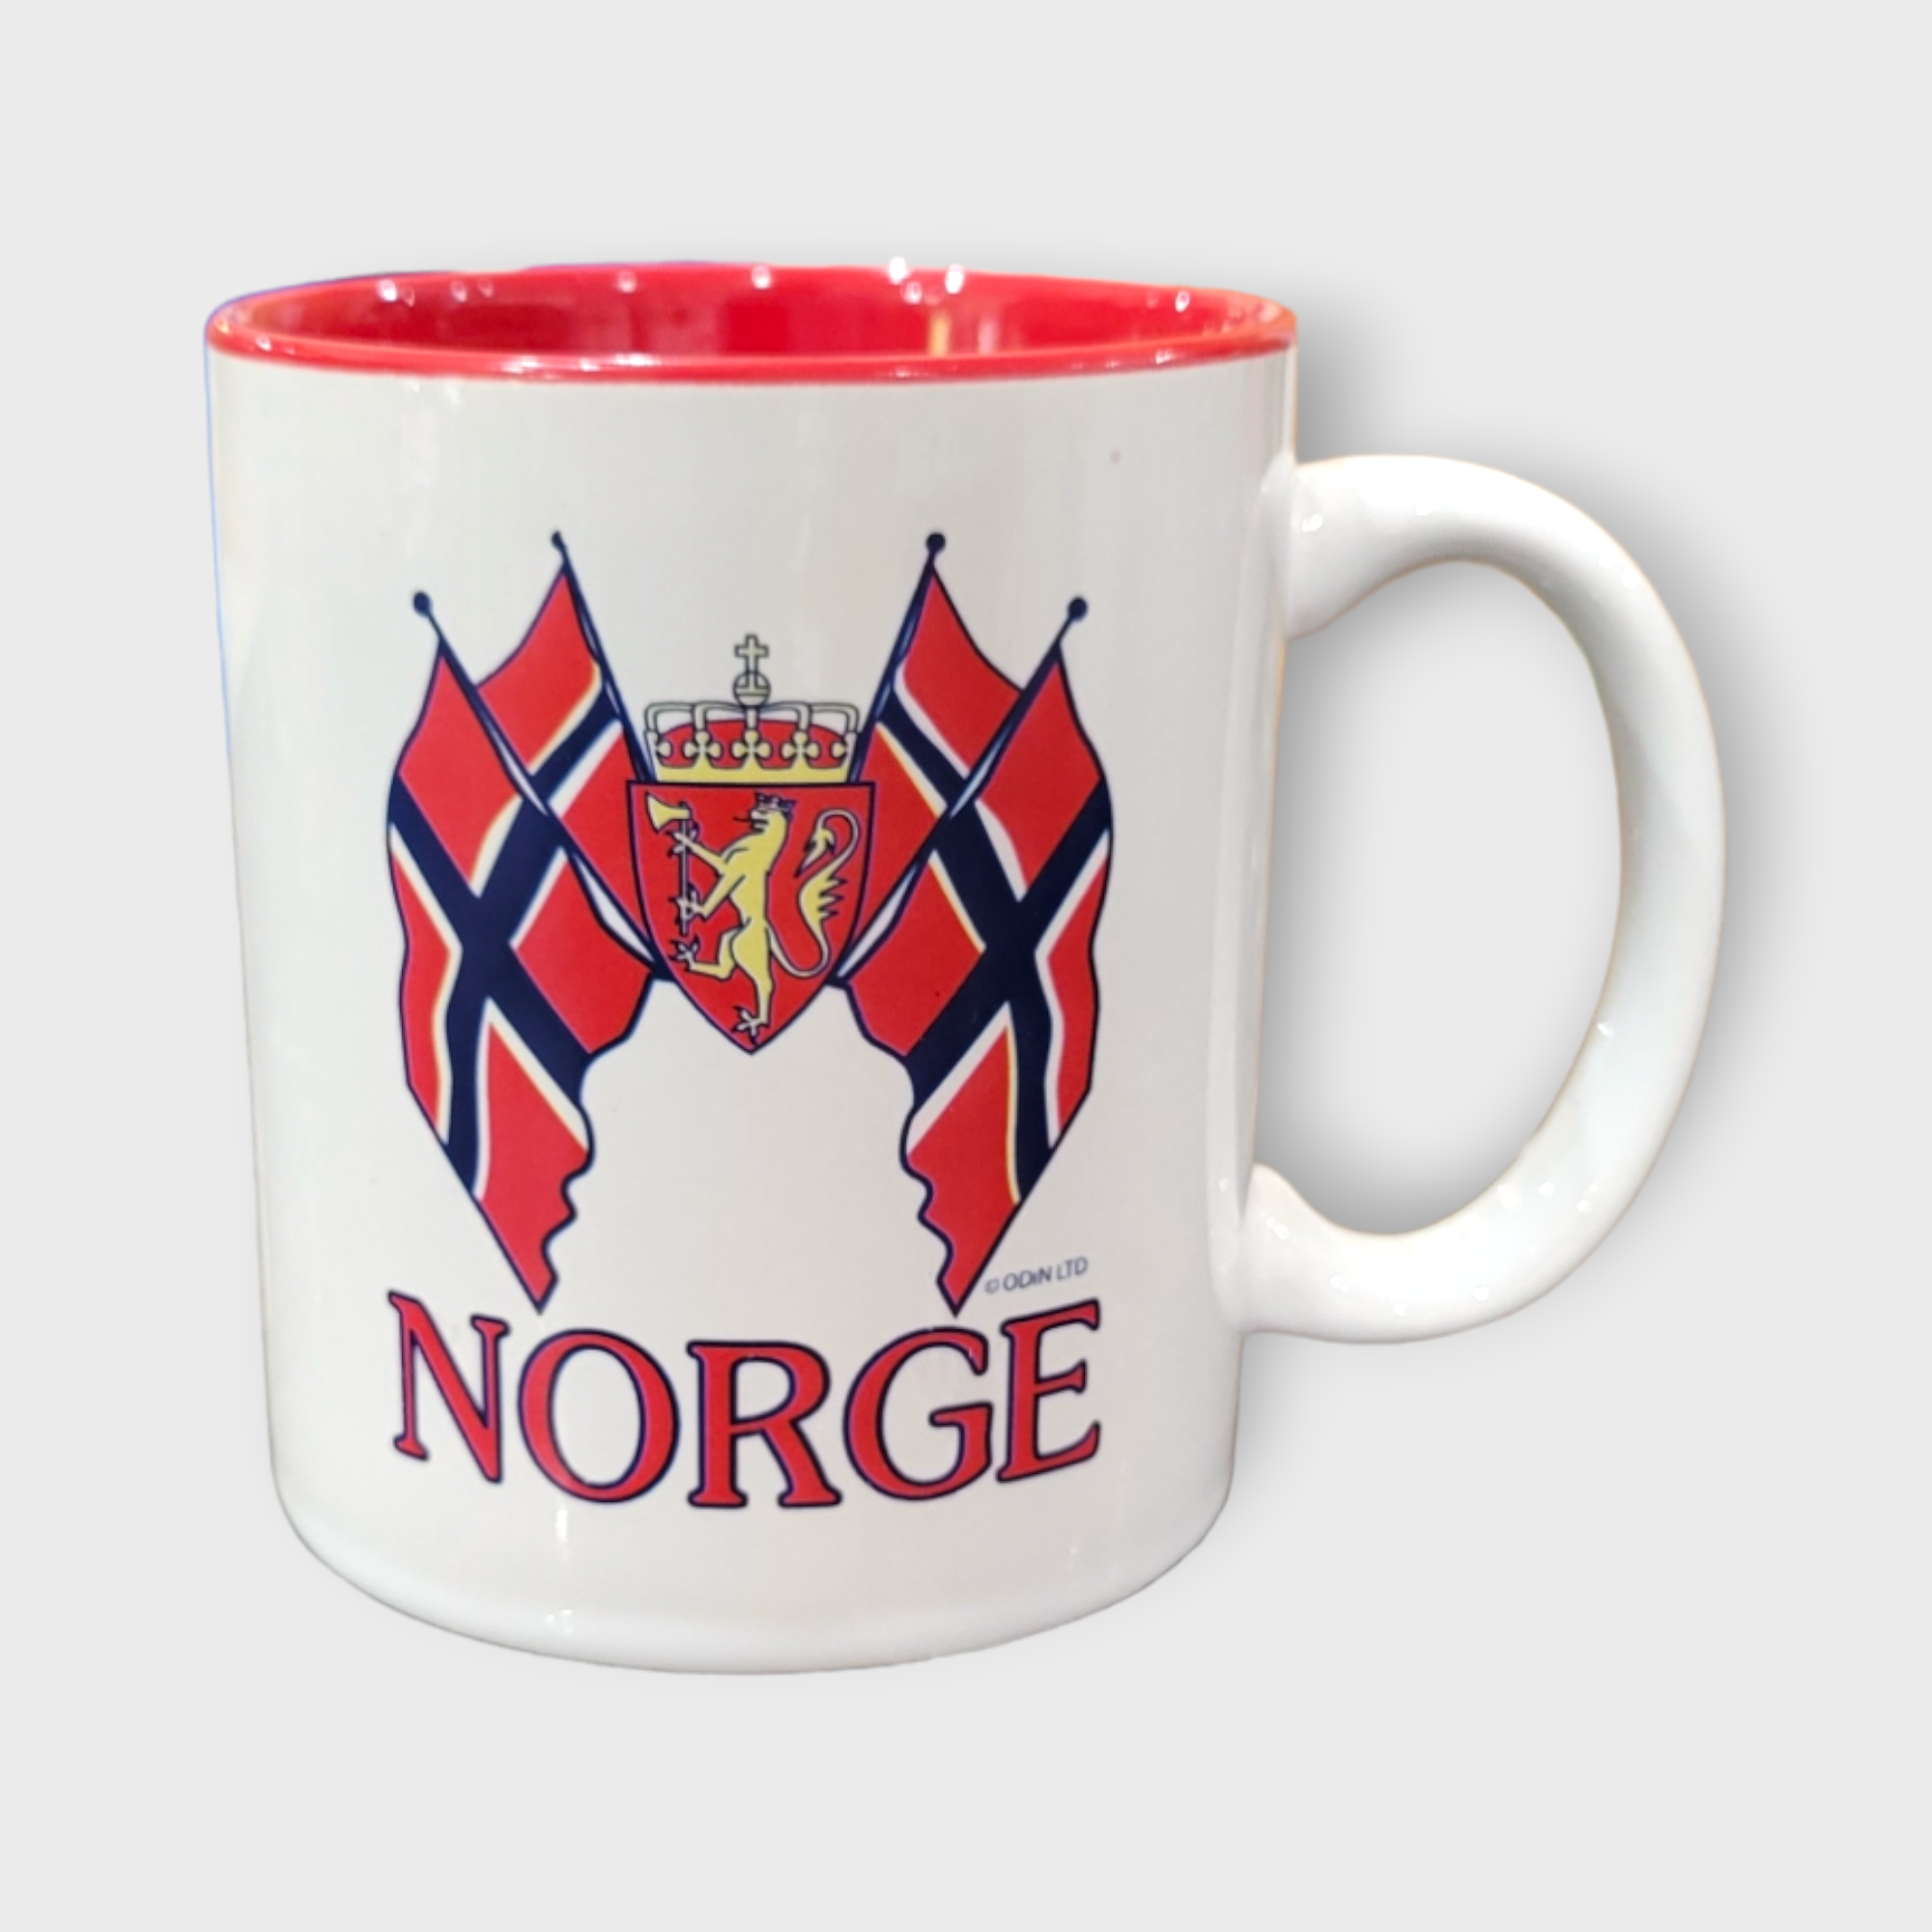 Mug: "Norge" (11oz)